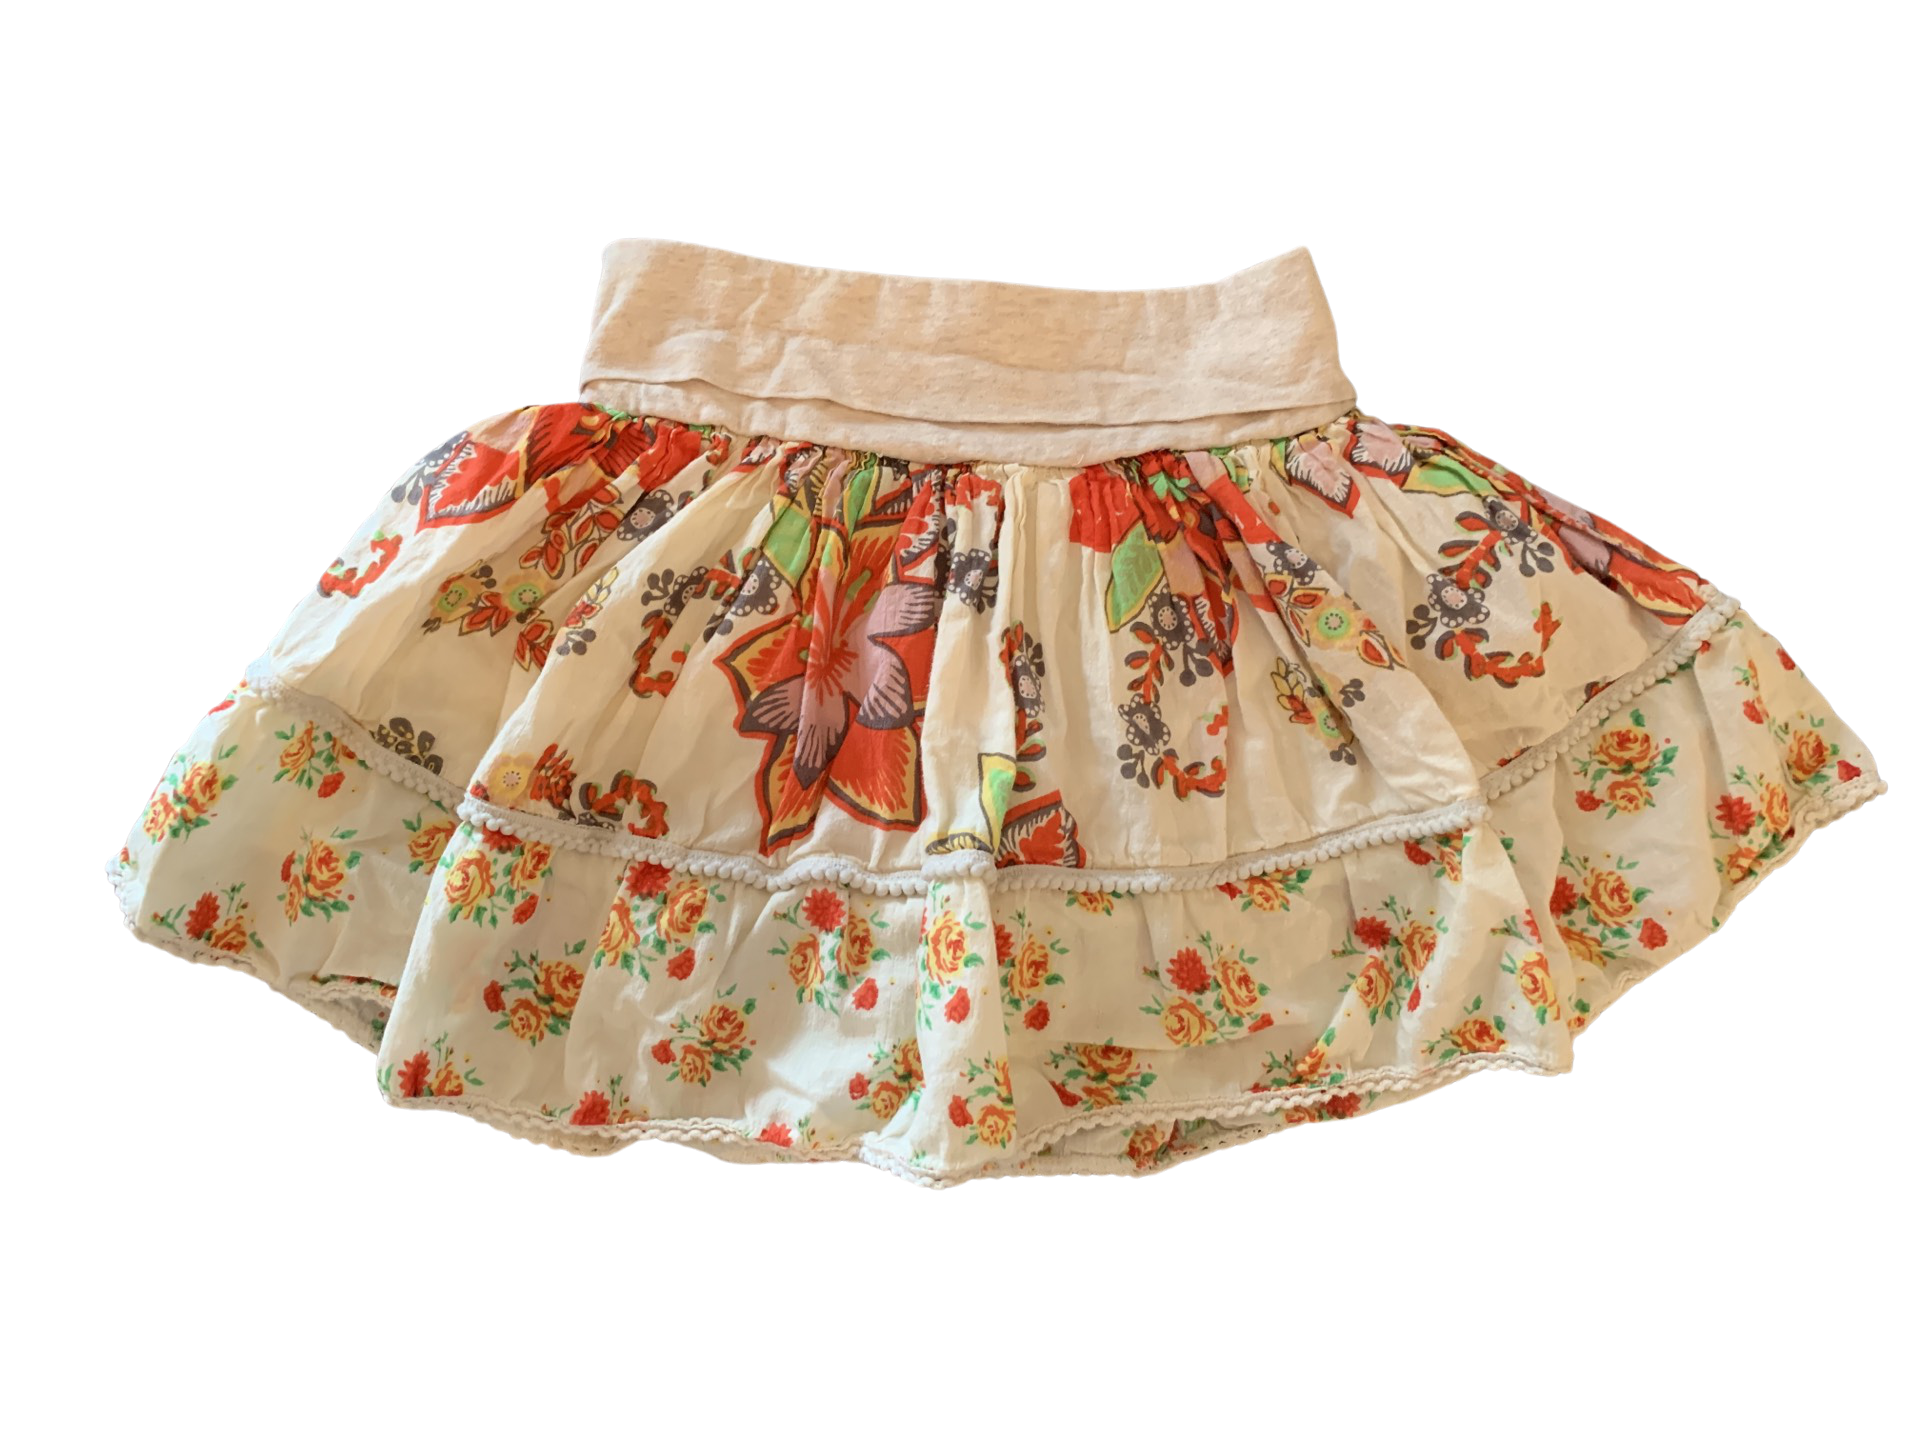 Girls Floral Skirt